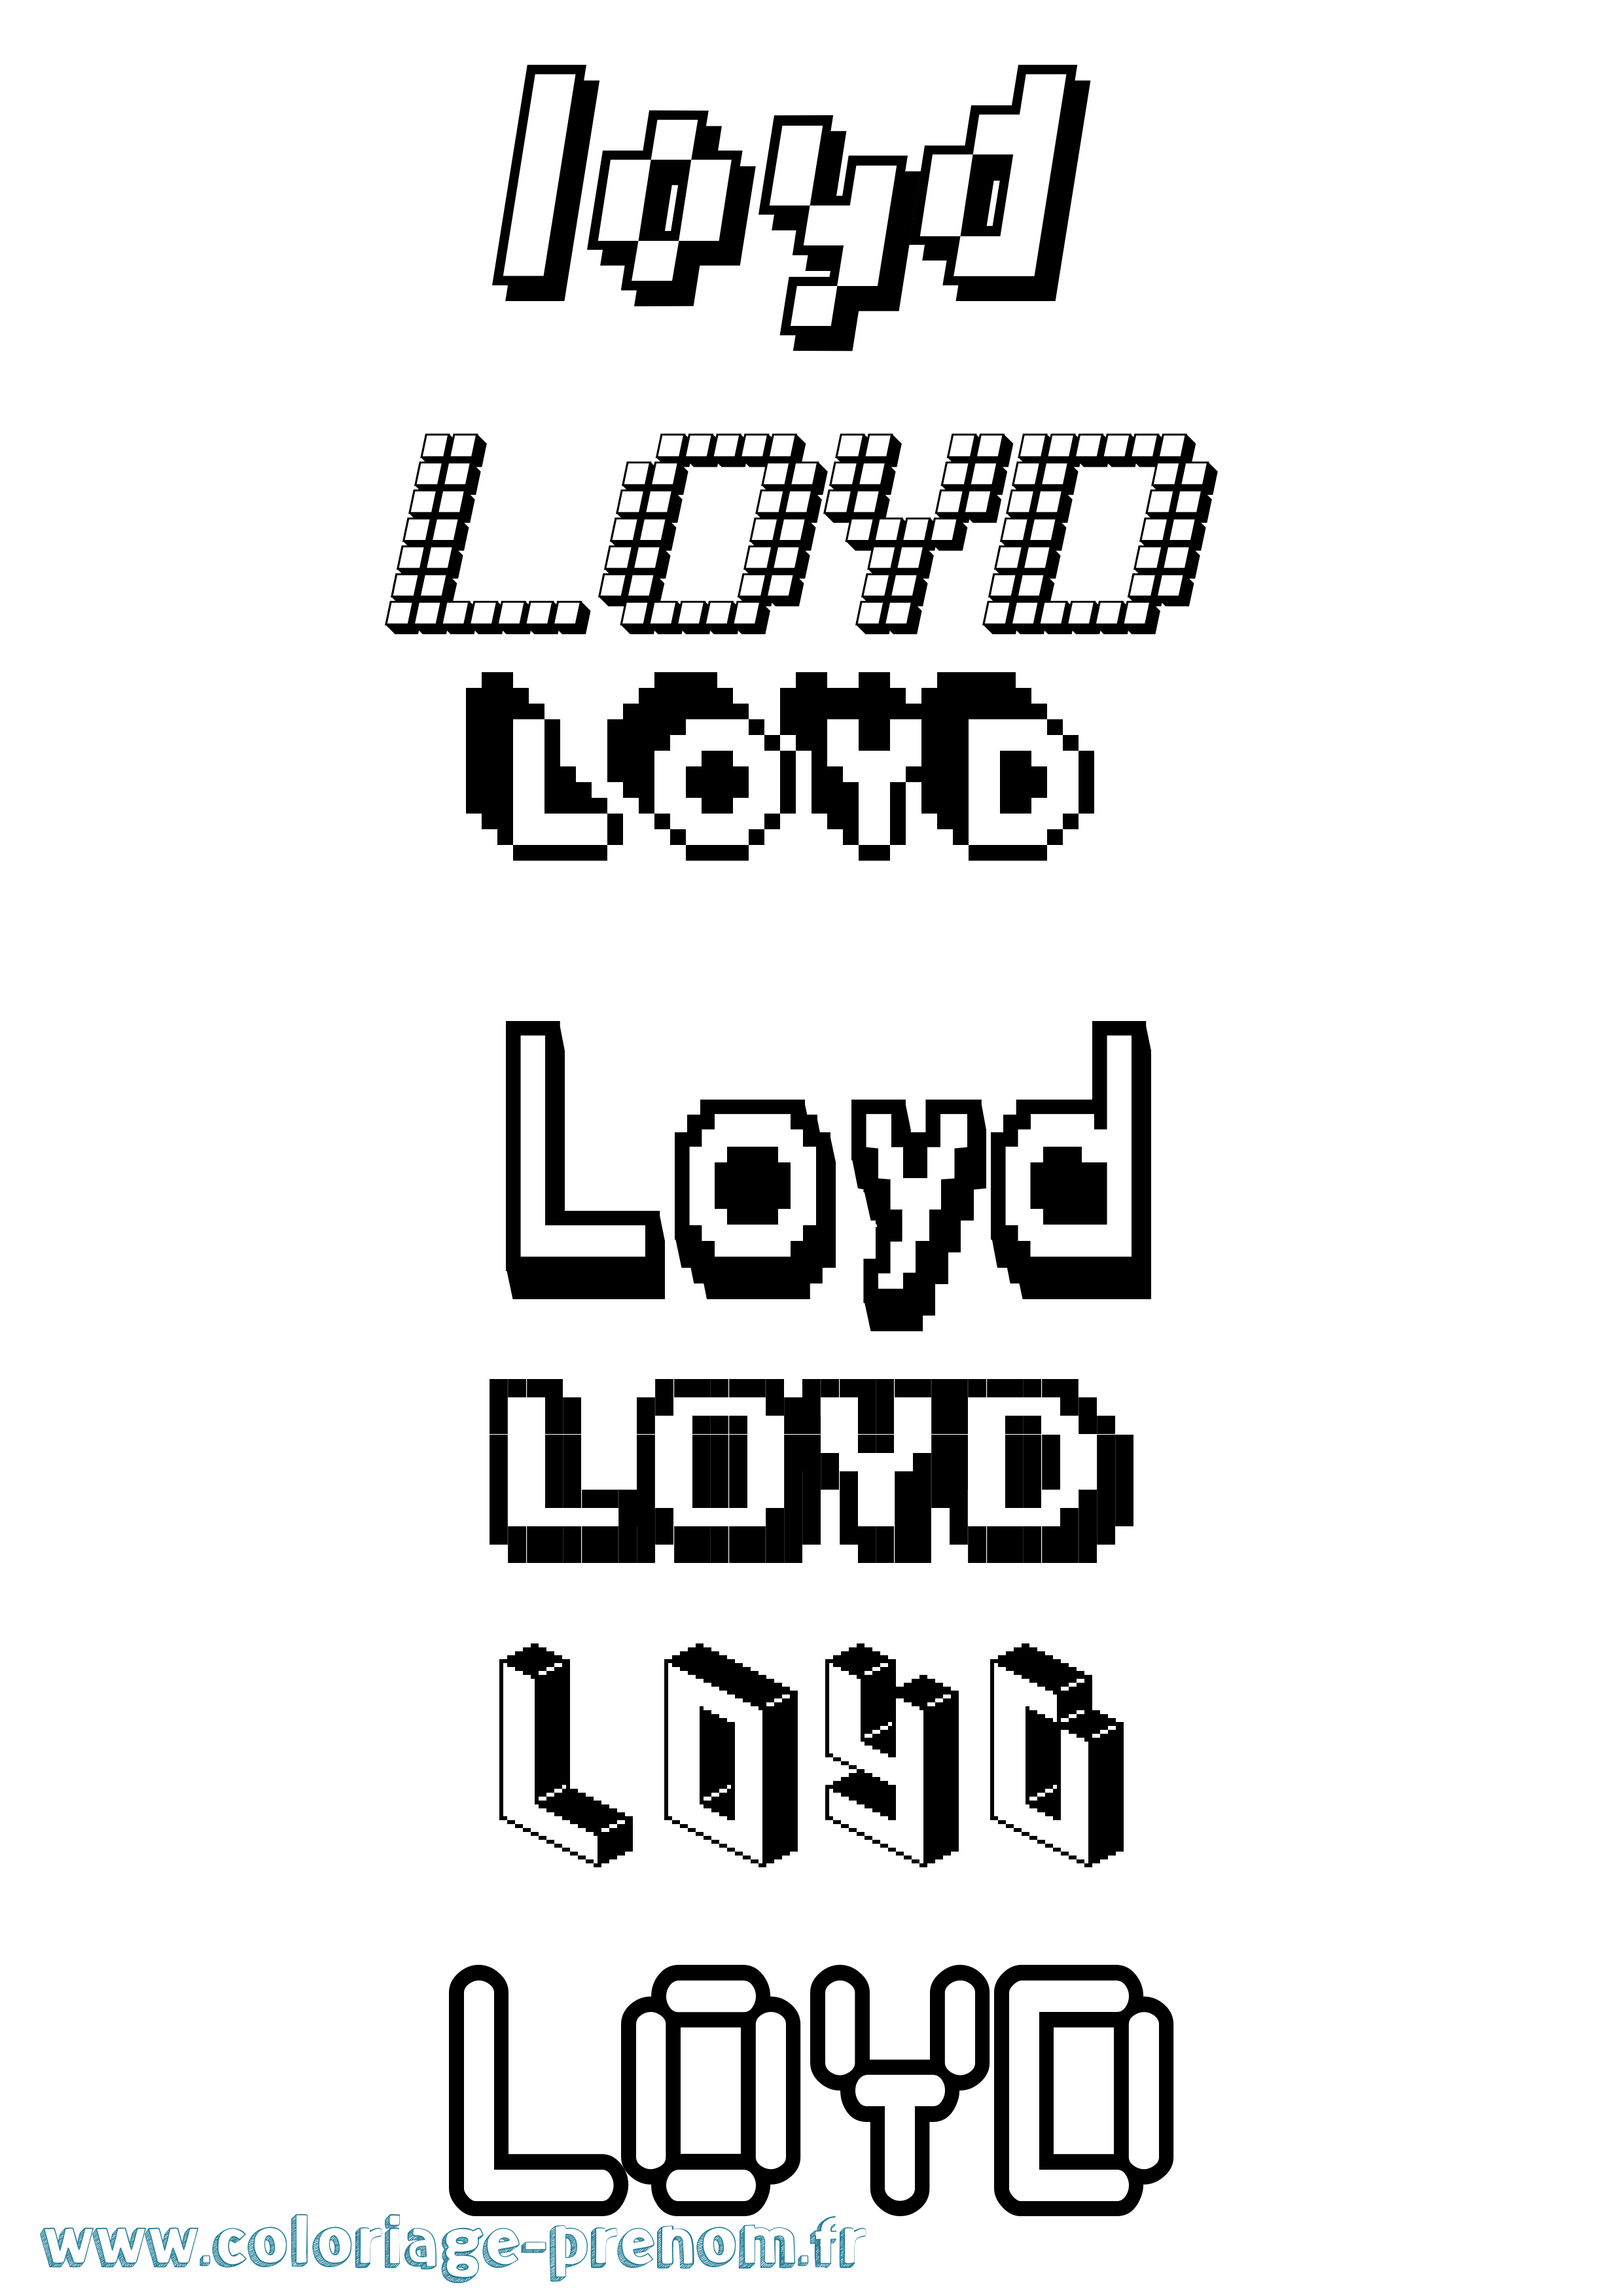 Coloriage prénom Loyd Pixel